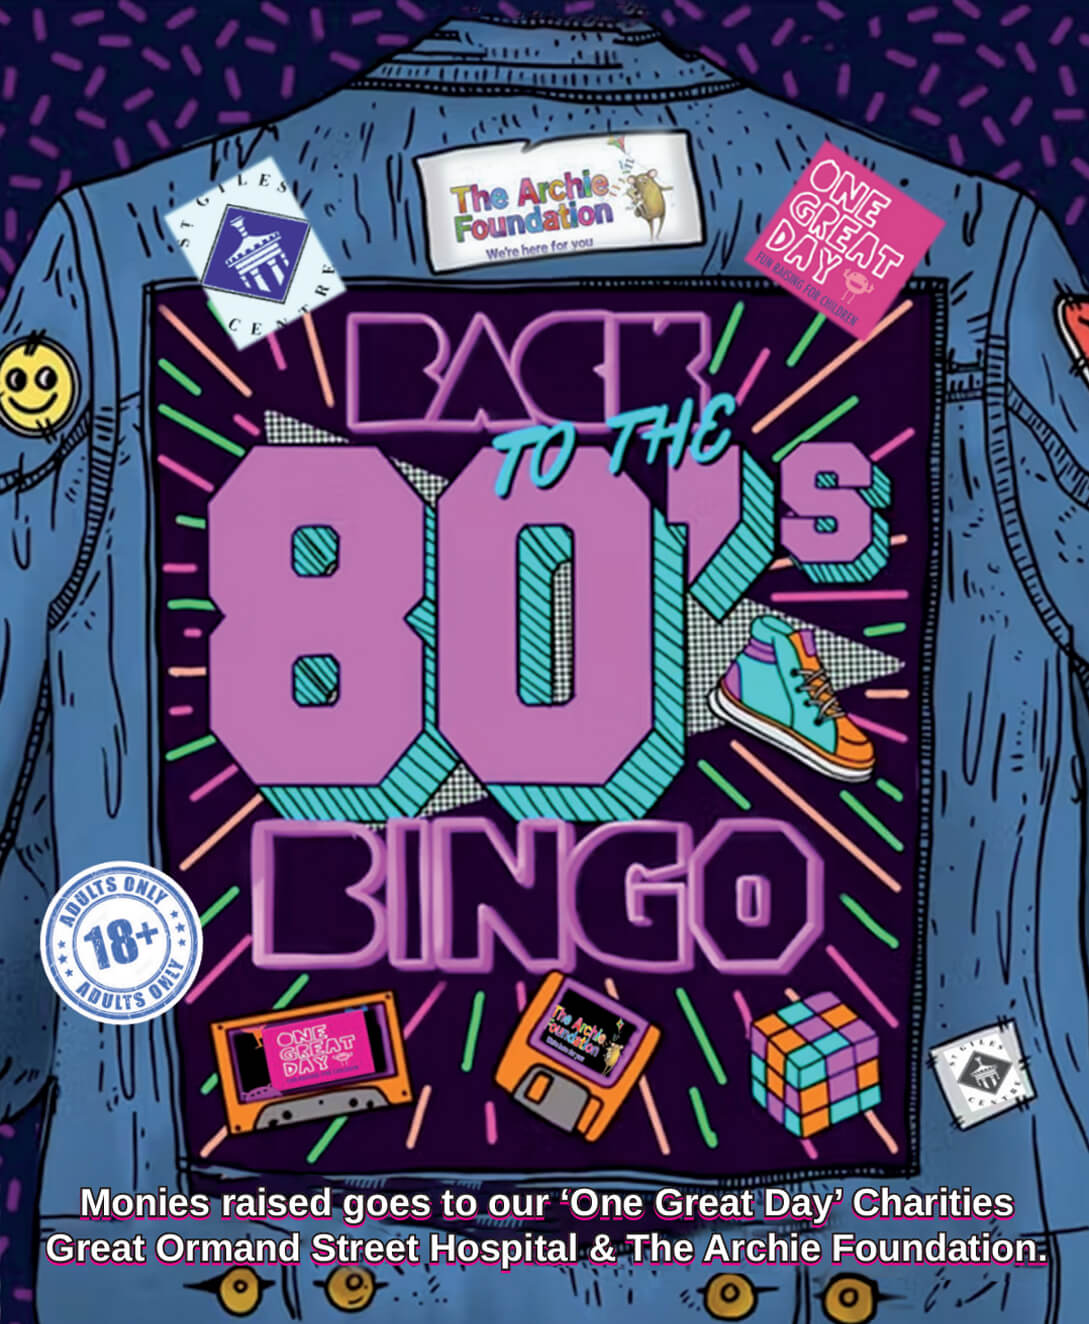 80s Bingo